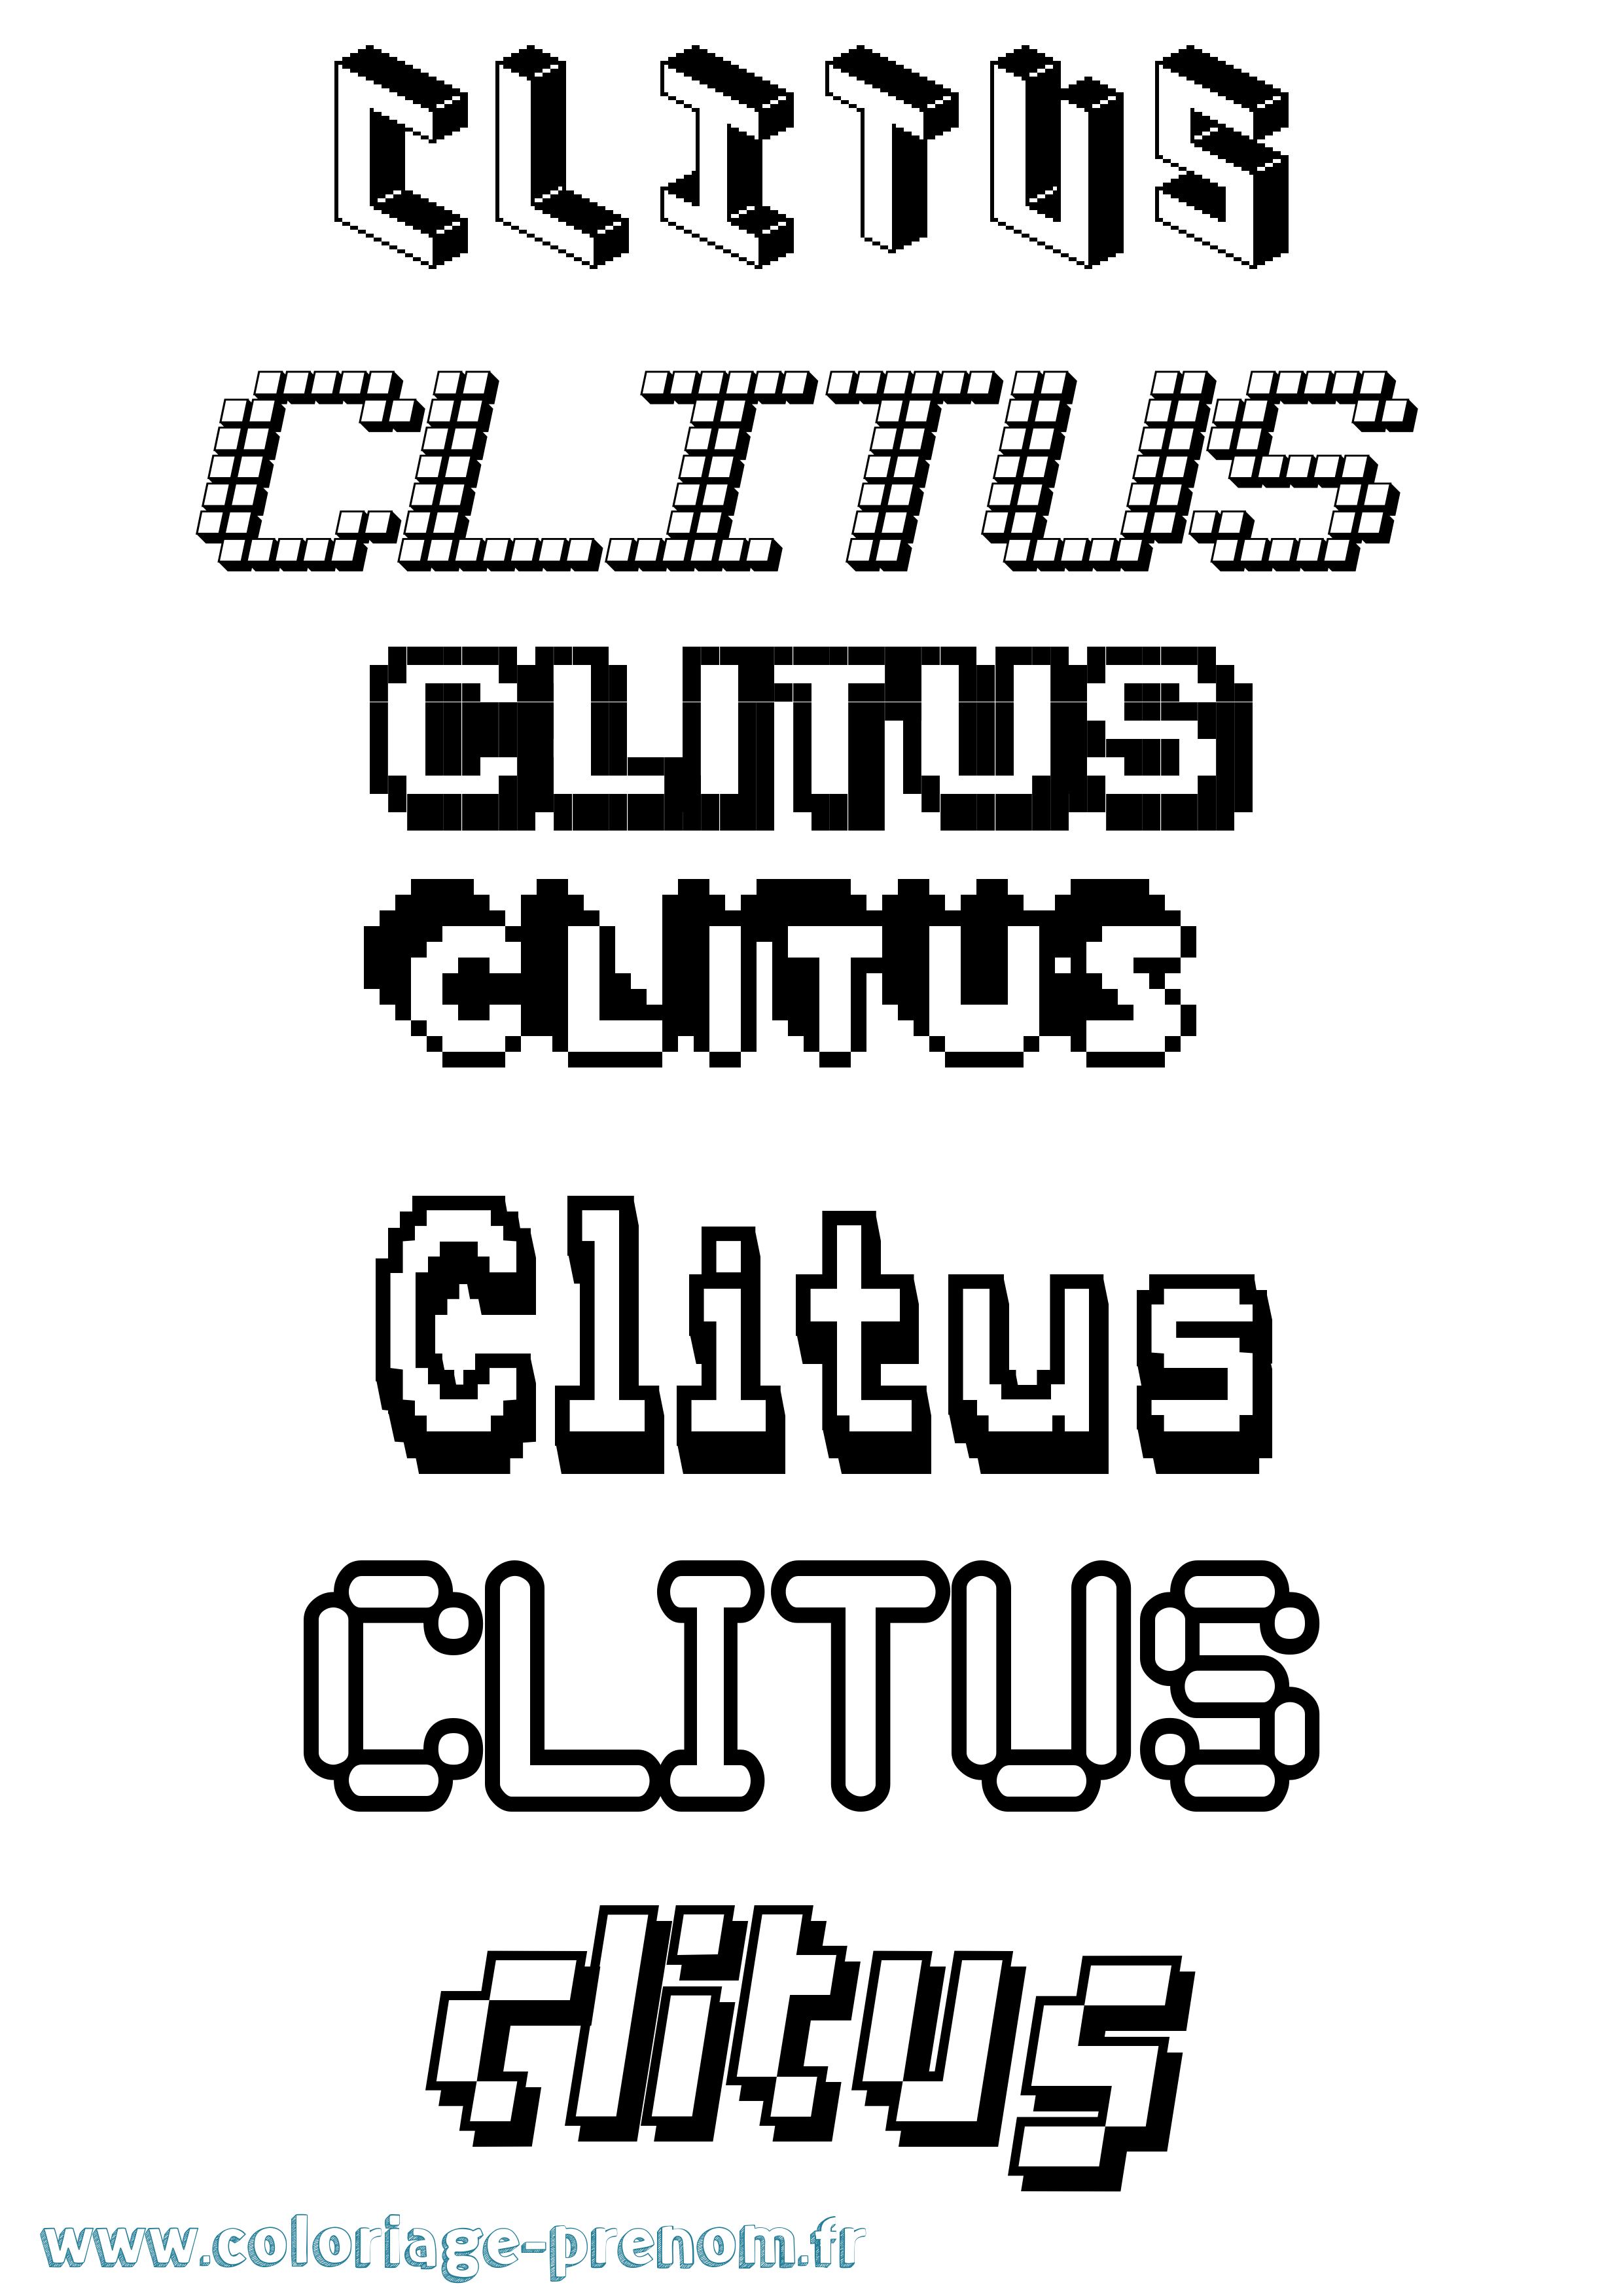 Coloriage prénom Clitus Pixel